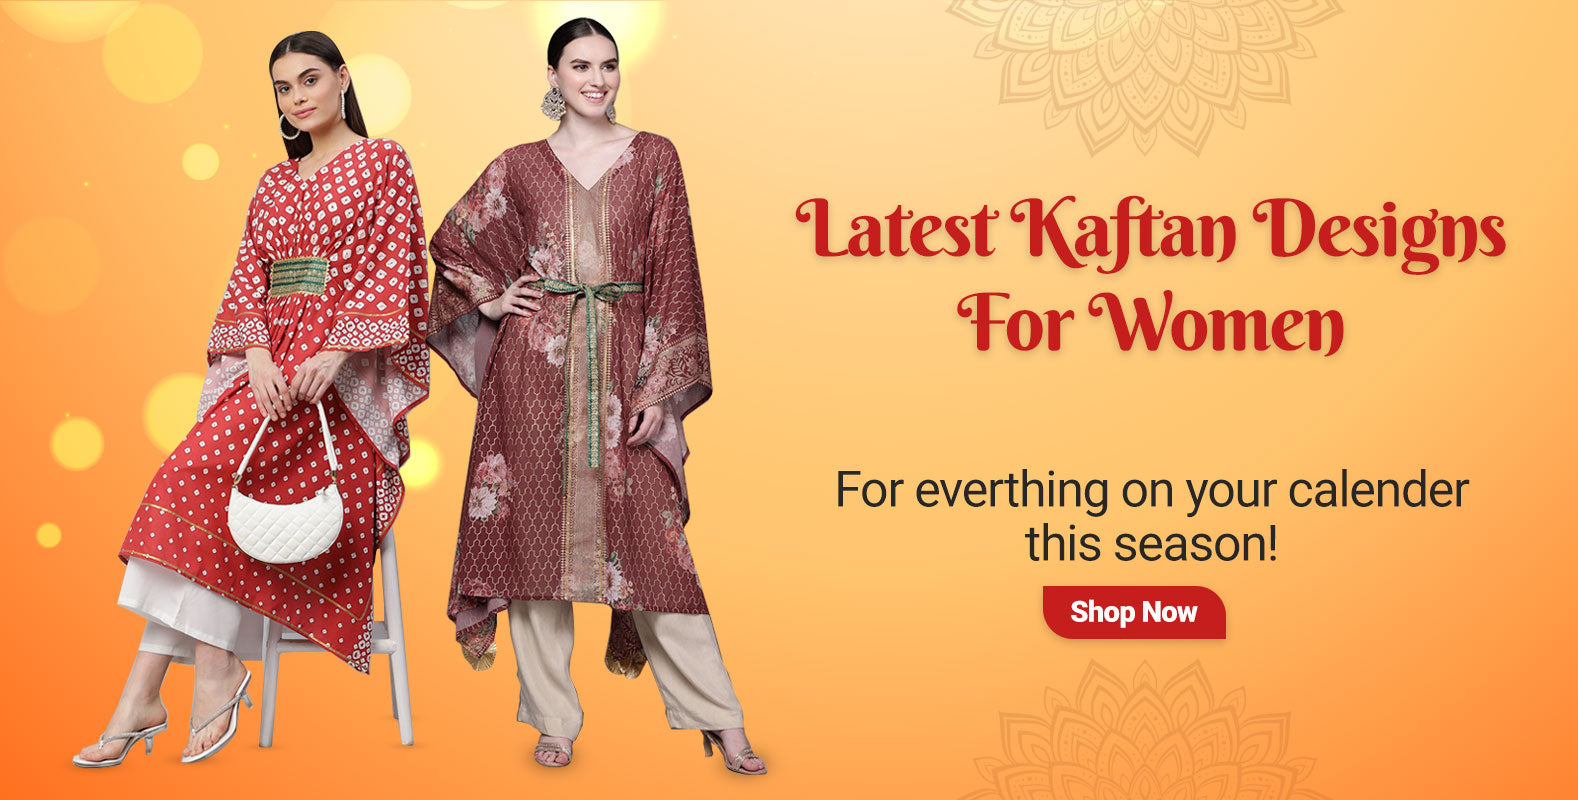 Fancy Red Kaftan Set - Beautiful Kaftans - Chic Dresses - Sophisticated